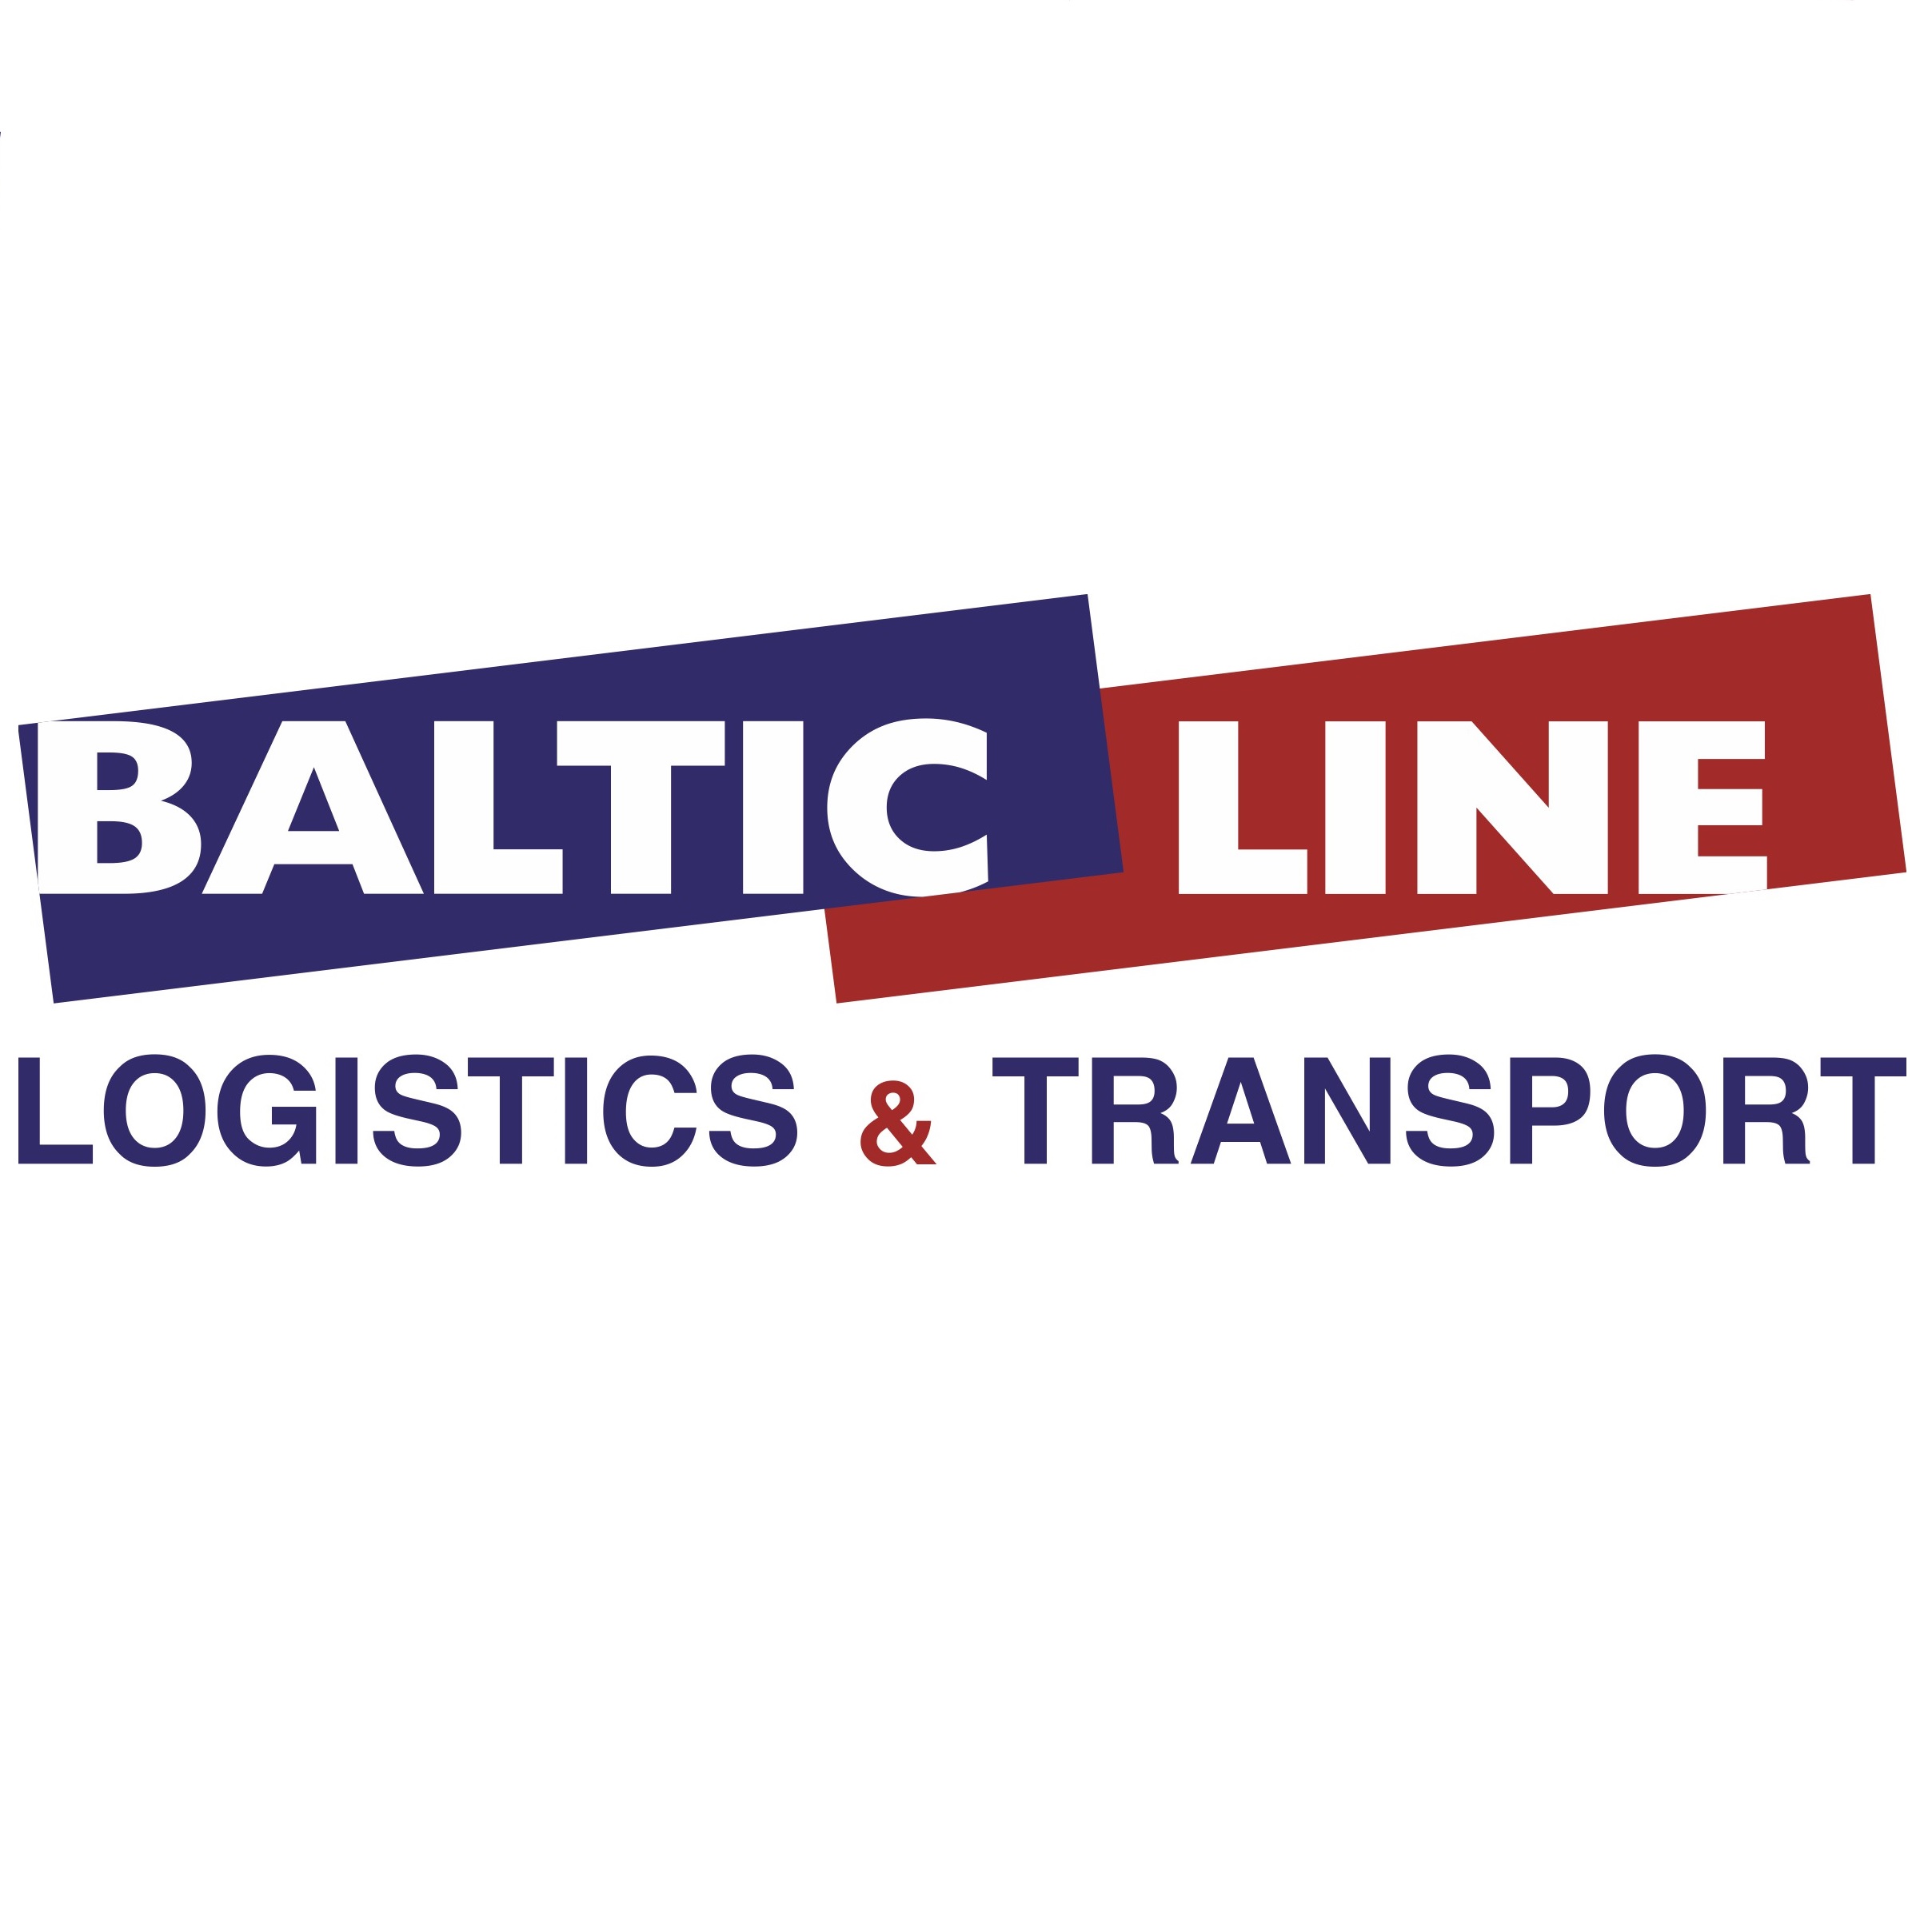 Baltic line logo